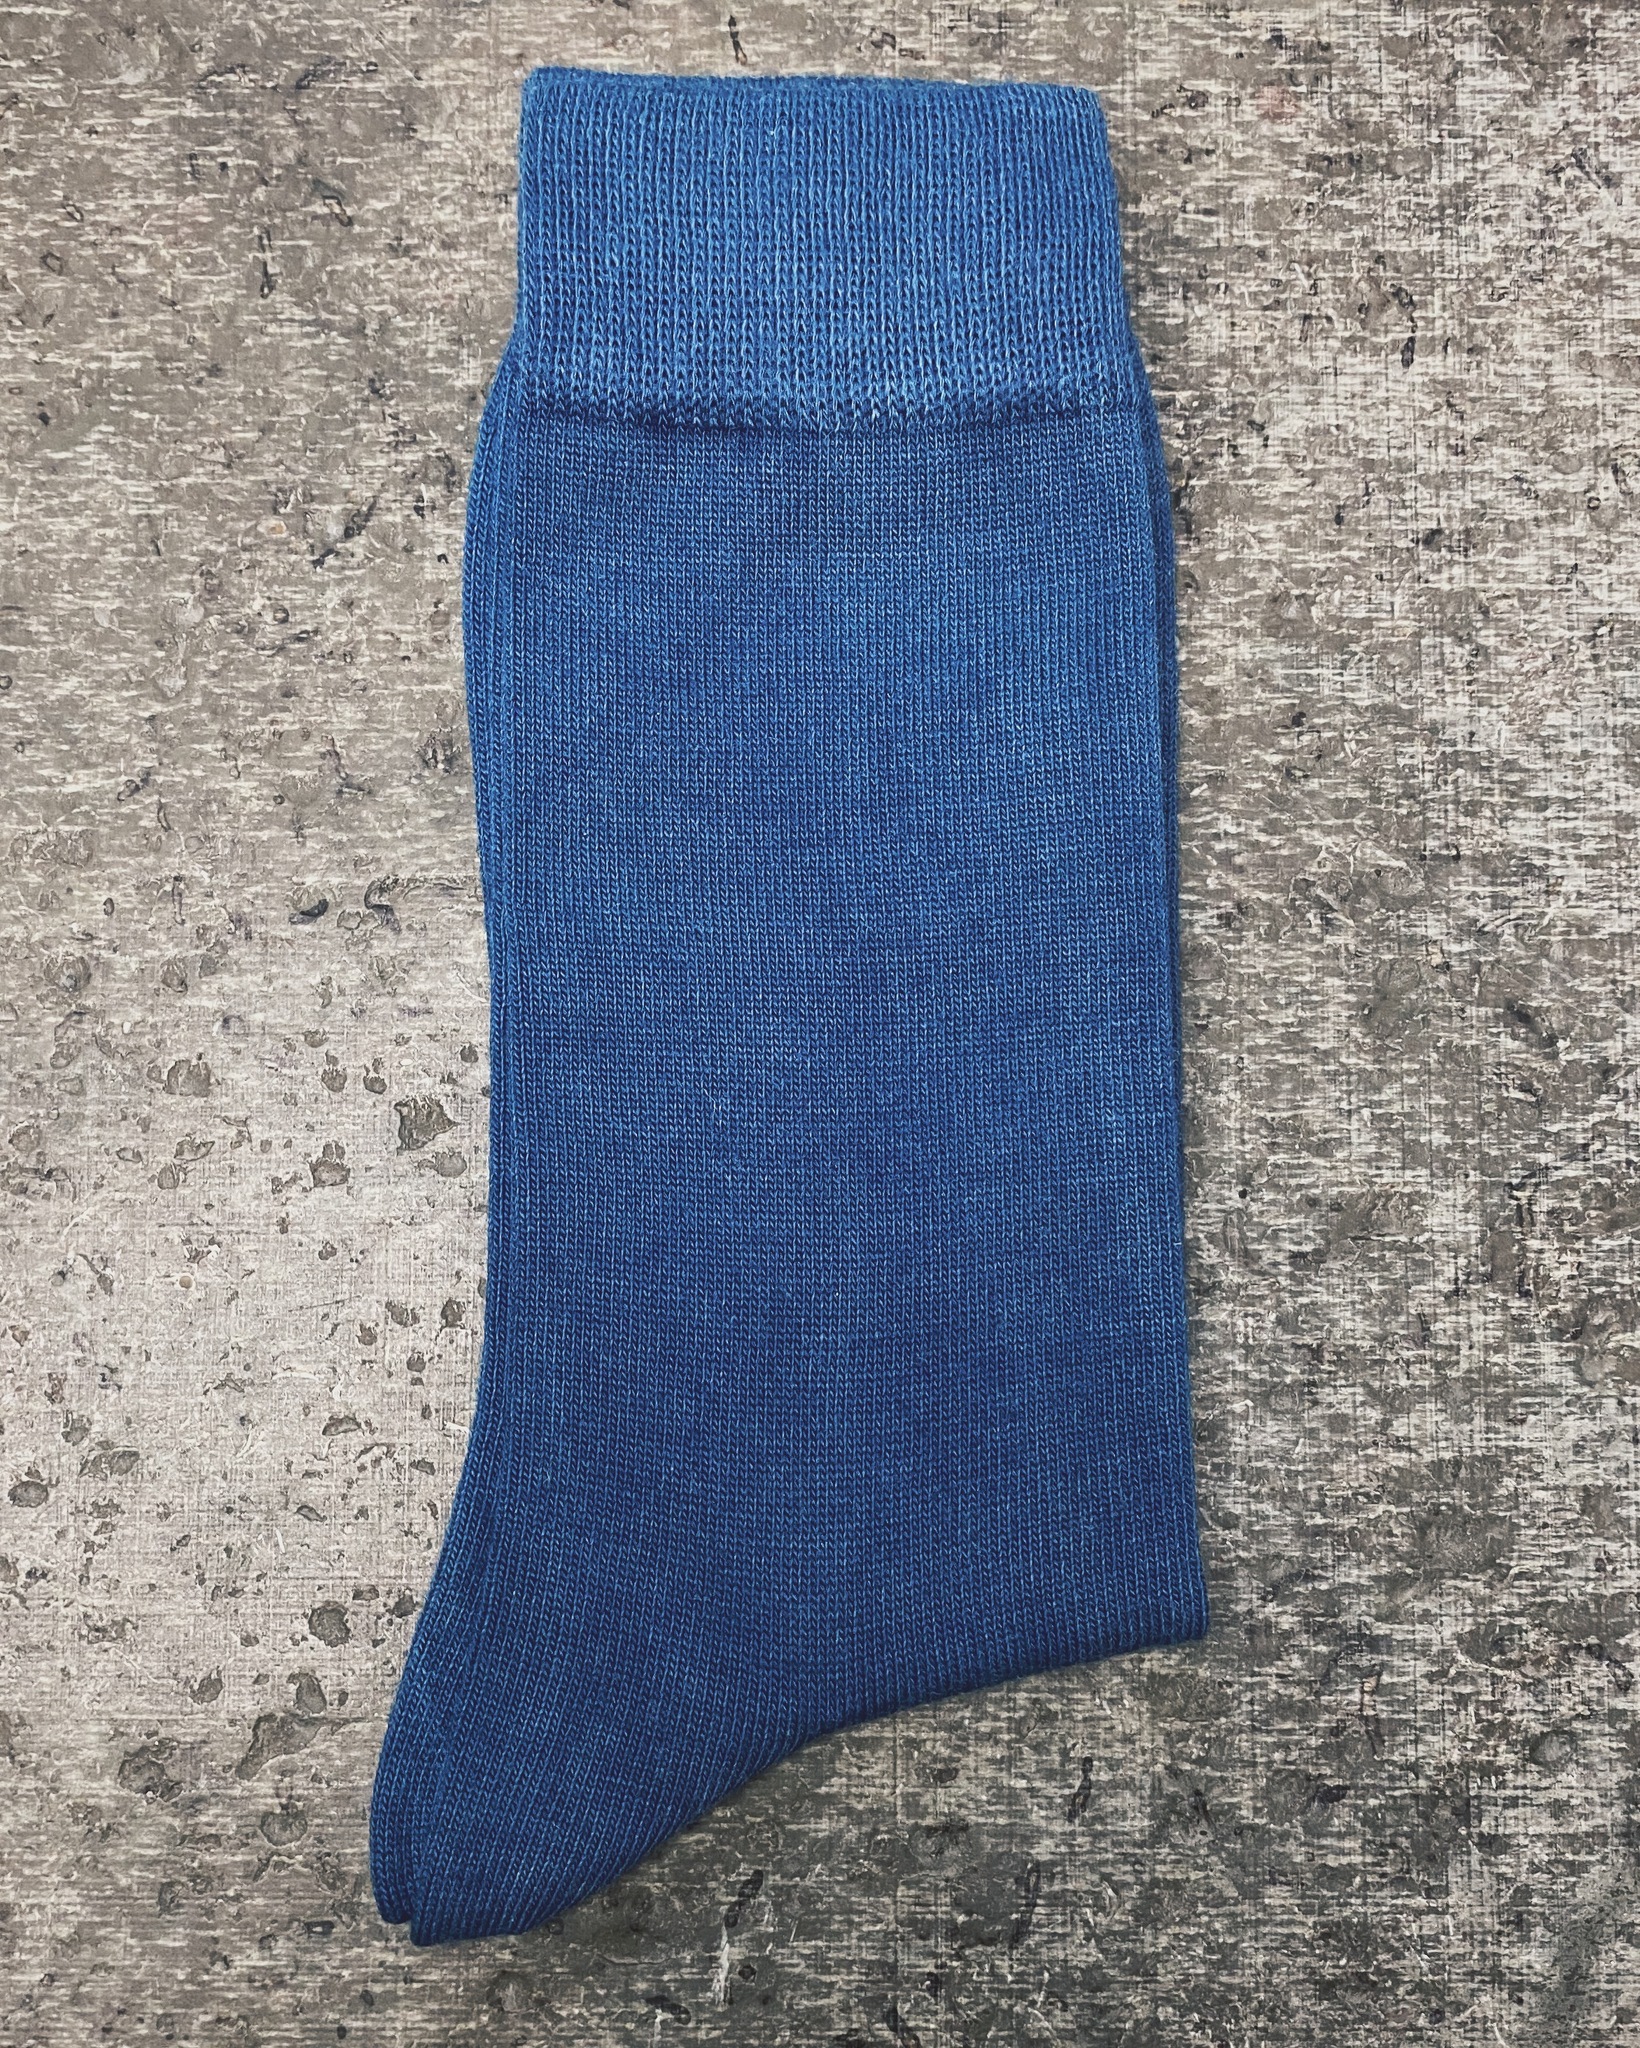 Wool sock - True indigo blue